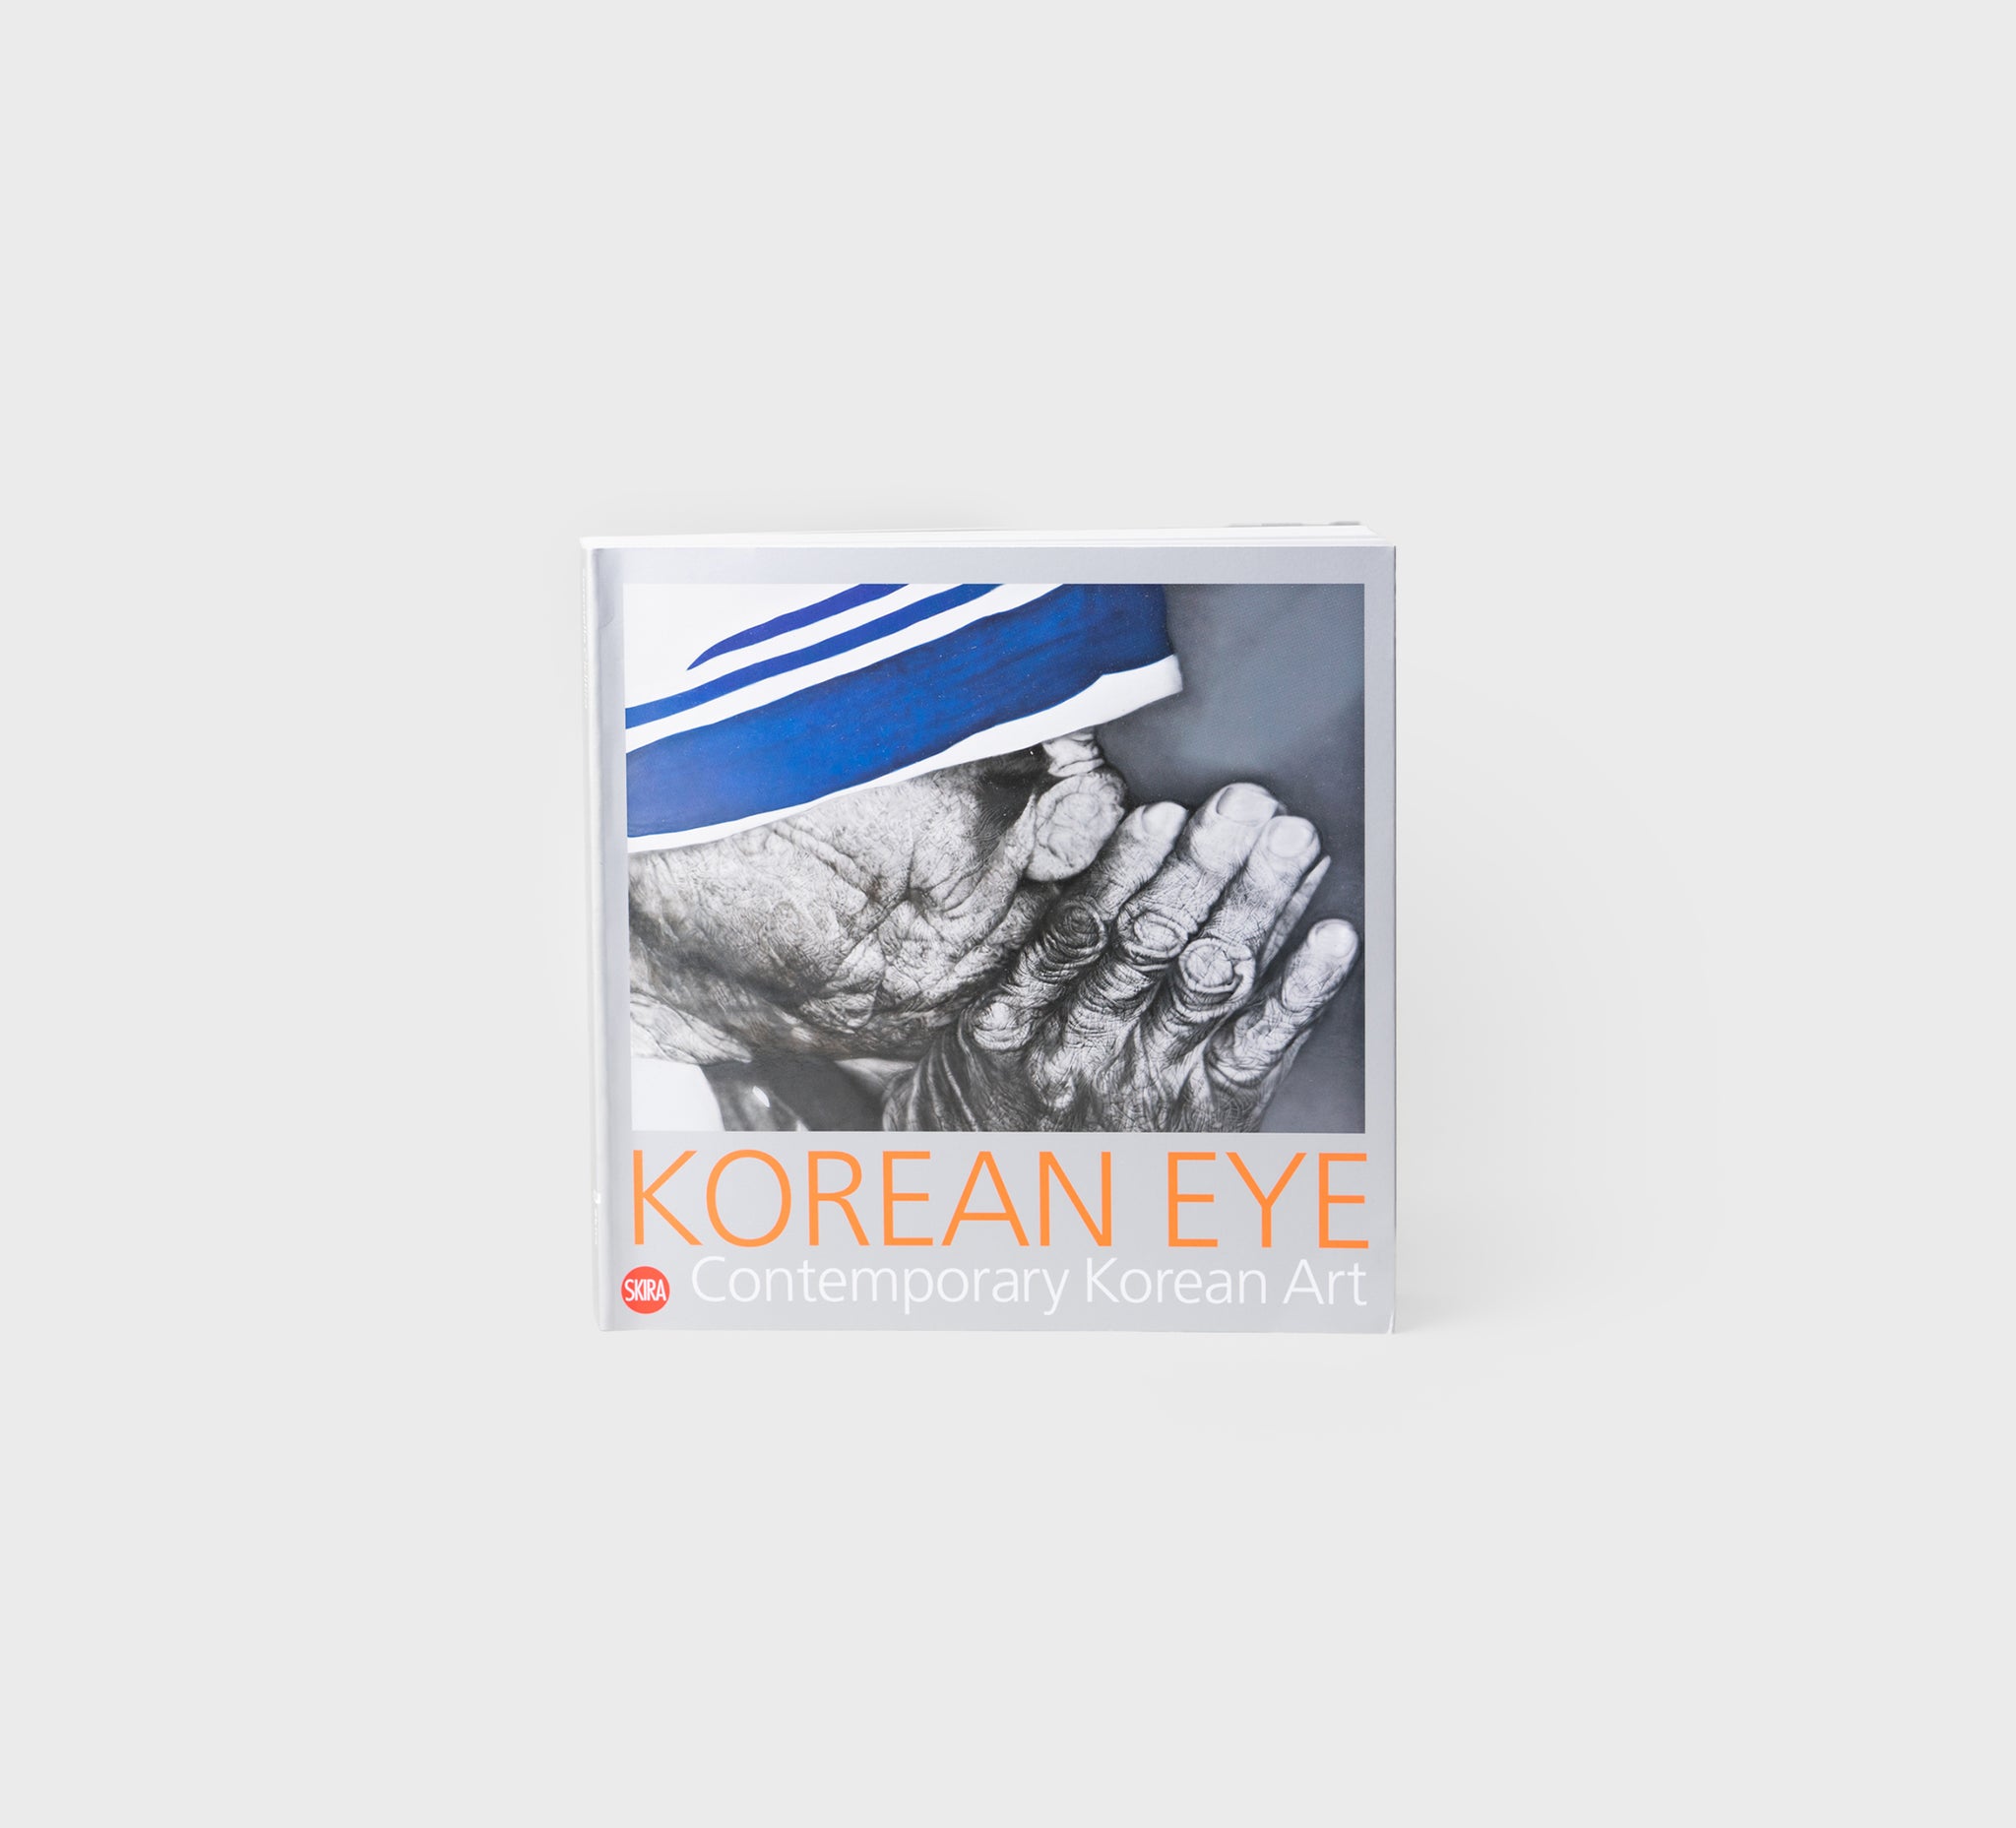 Korean Eye